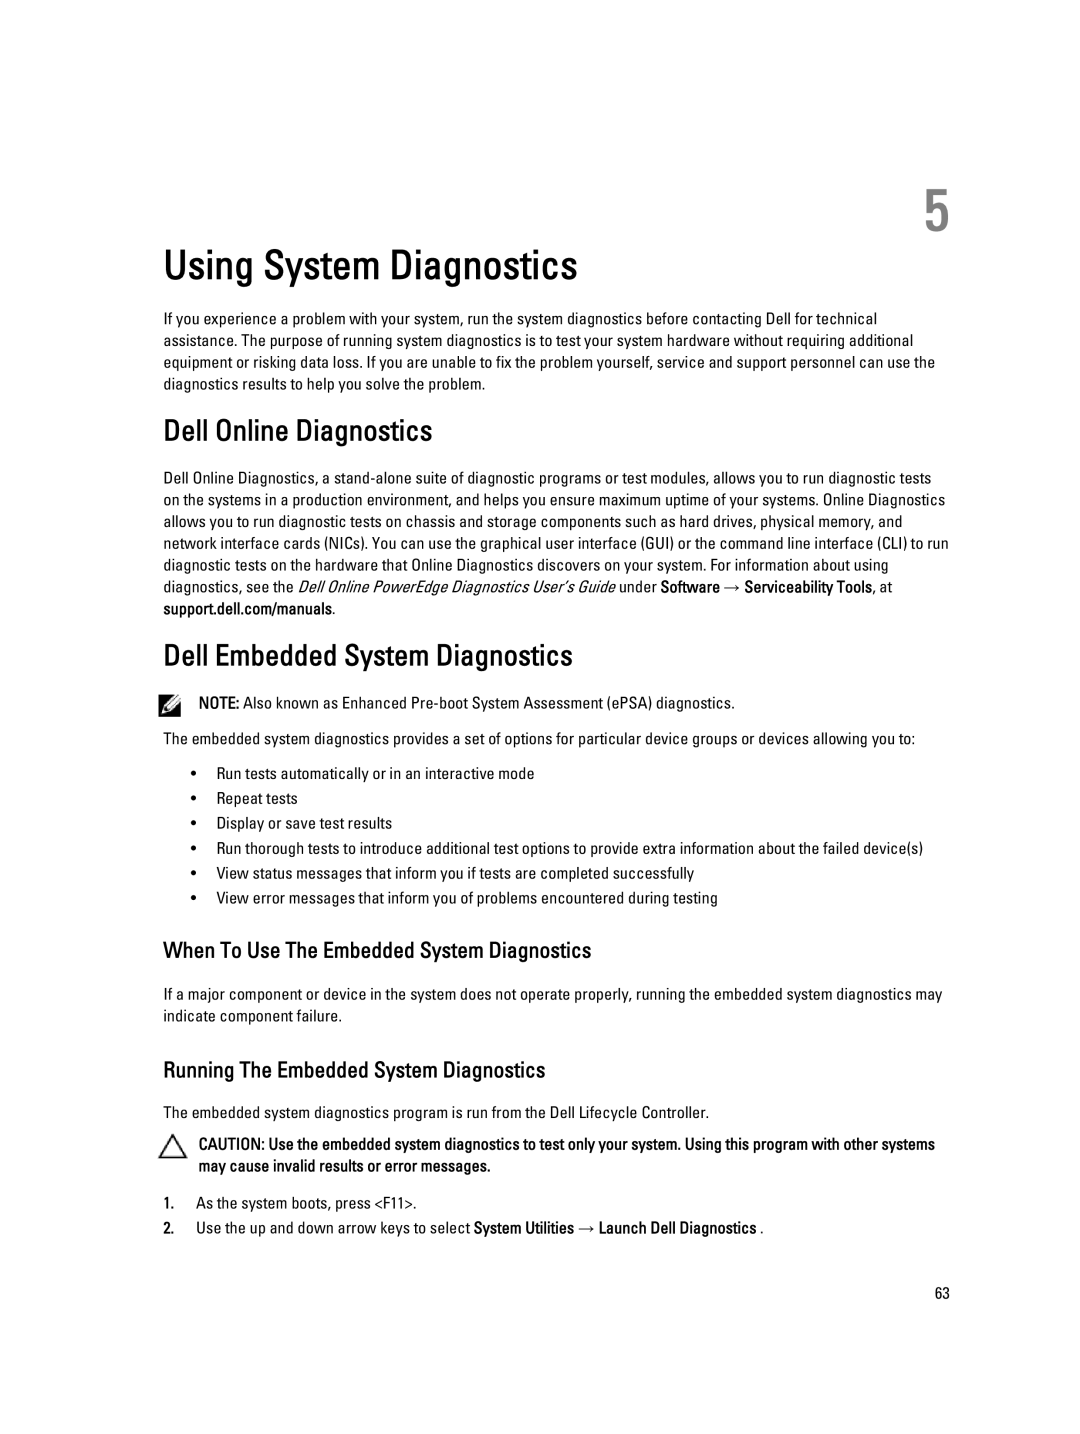 Dell M620 Dell Online Diagnostics Dell Embedded System Diagnostics, When To Use The Embedded System Diagnostics 